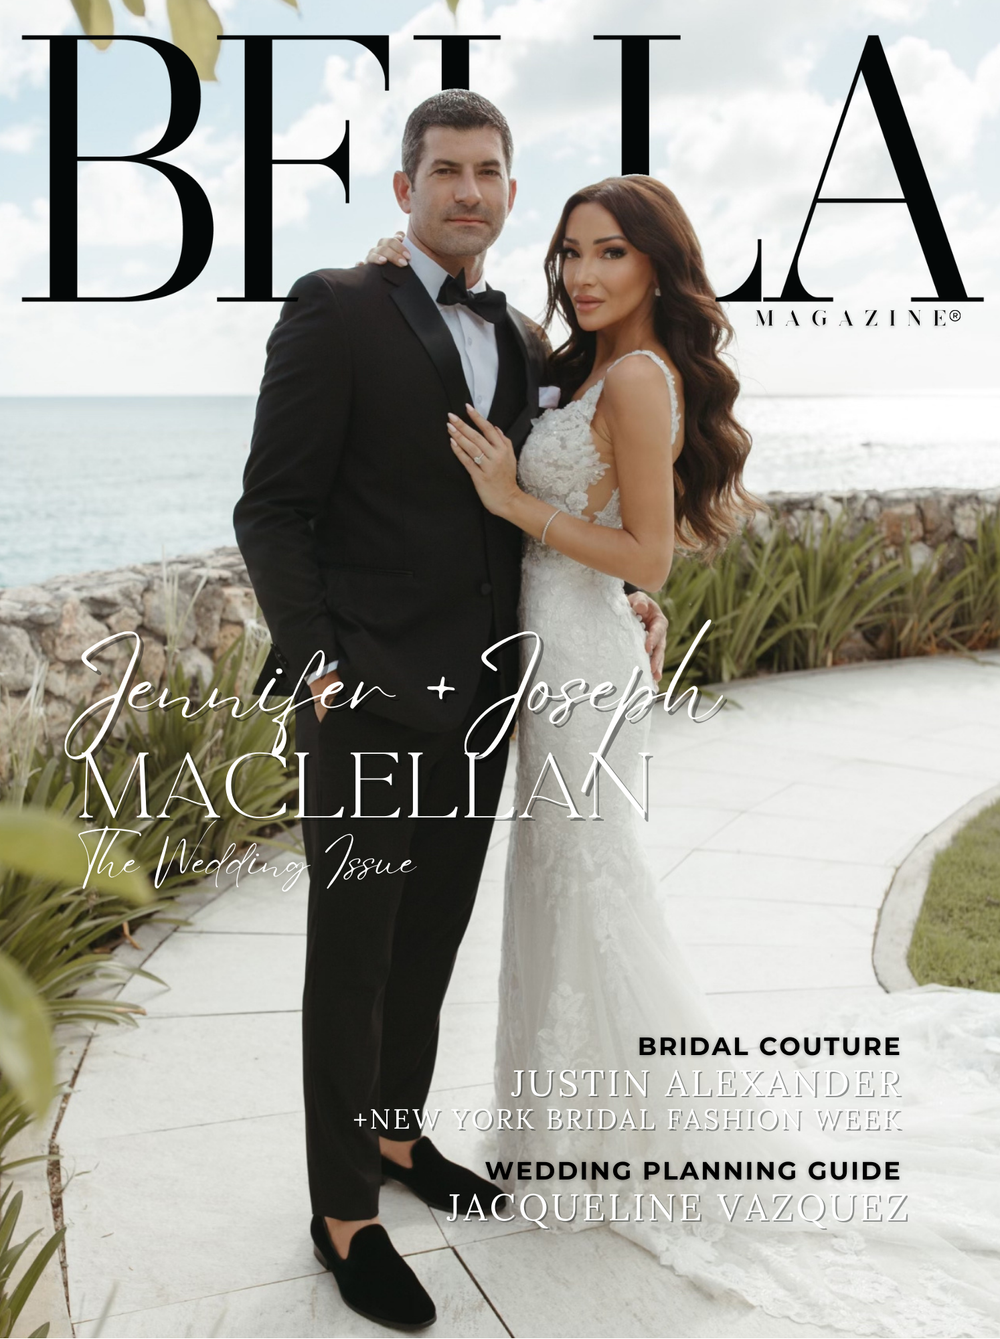 BELLA Magazine's 2023 Wedding Issue featuring Jennifer + Joseph MacLellan